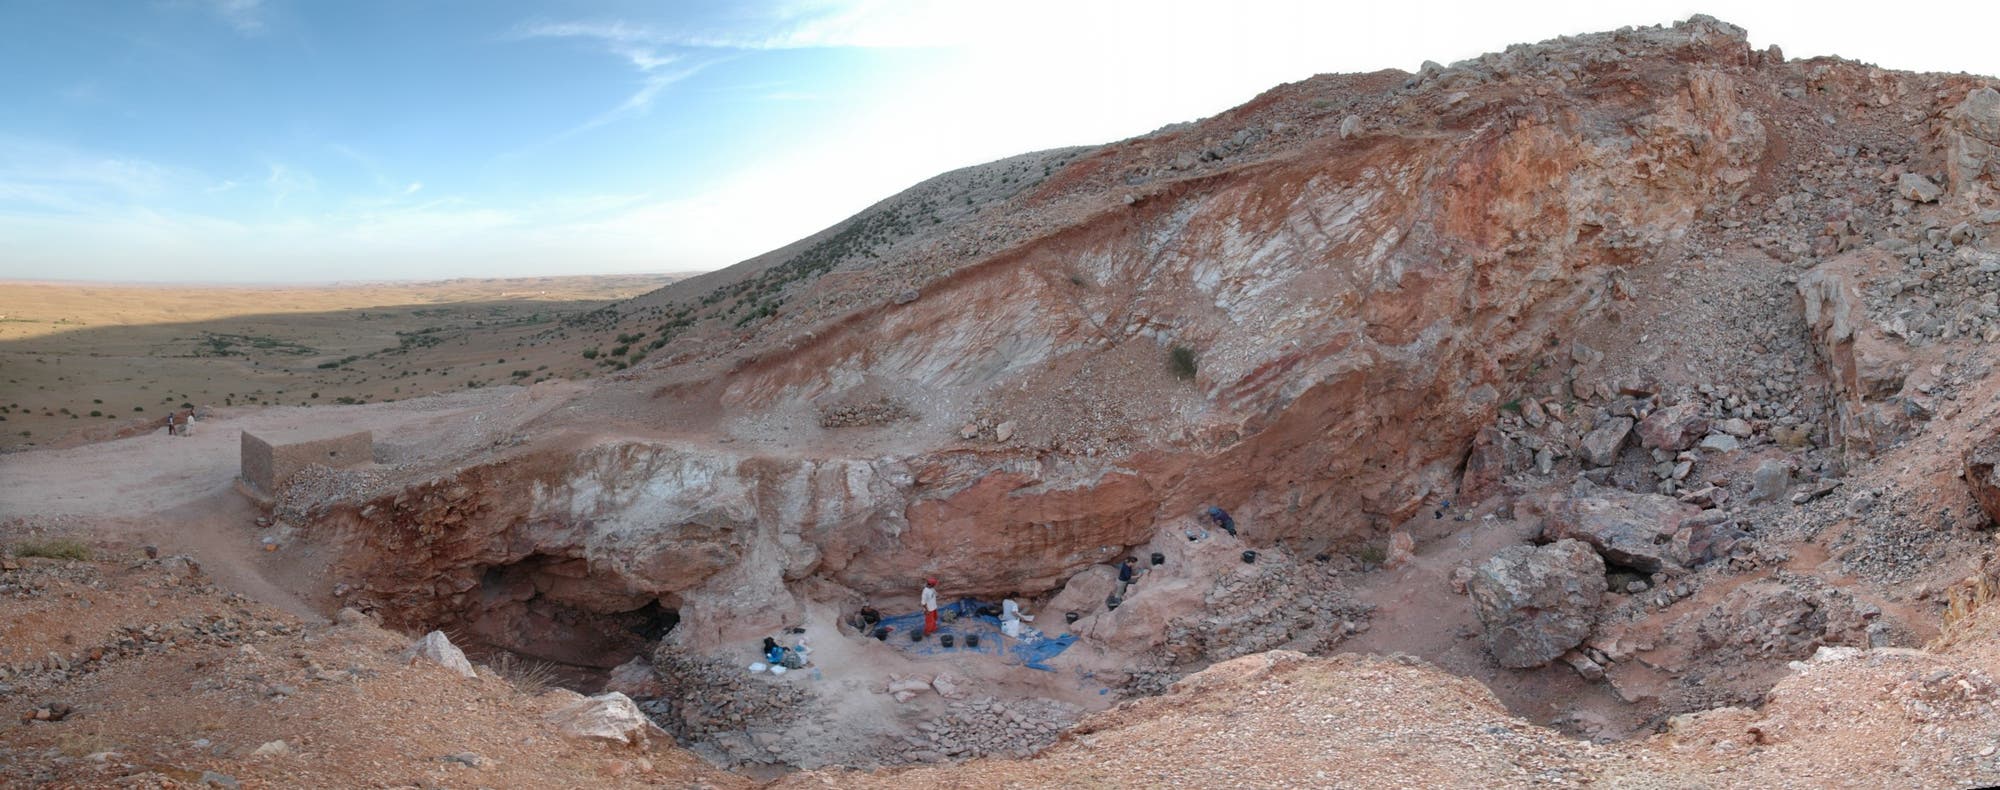 Ausgrabungen in Jebel Irhoud